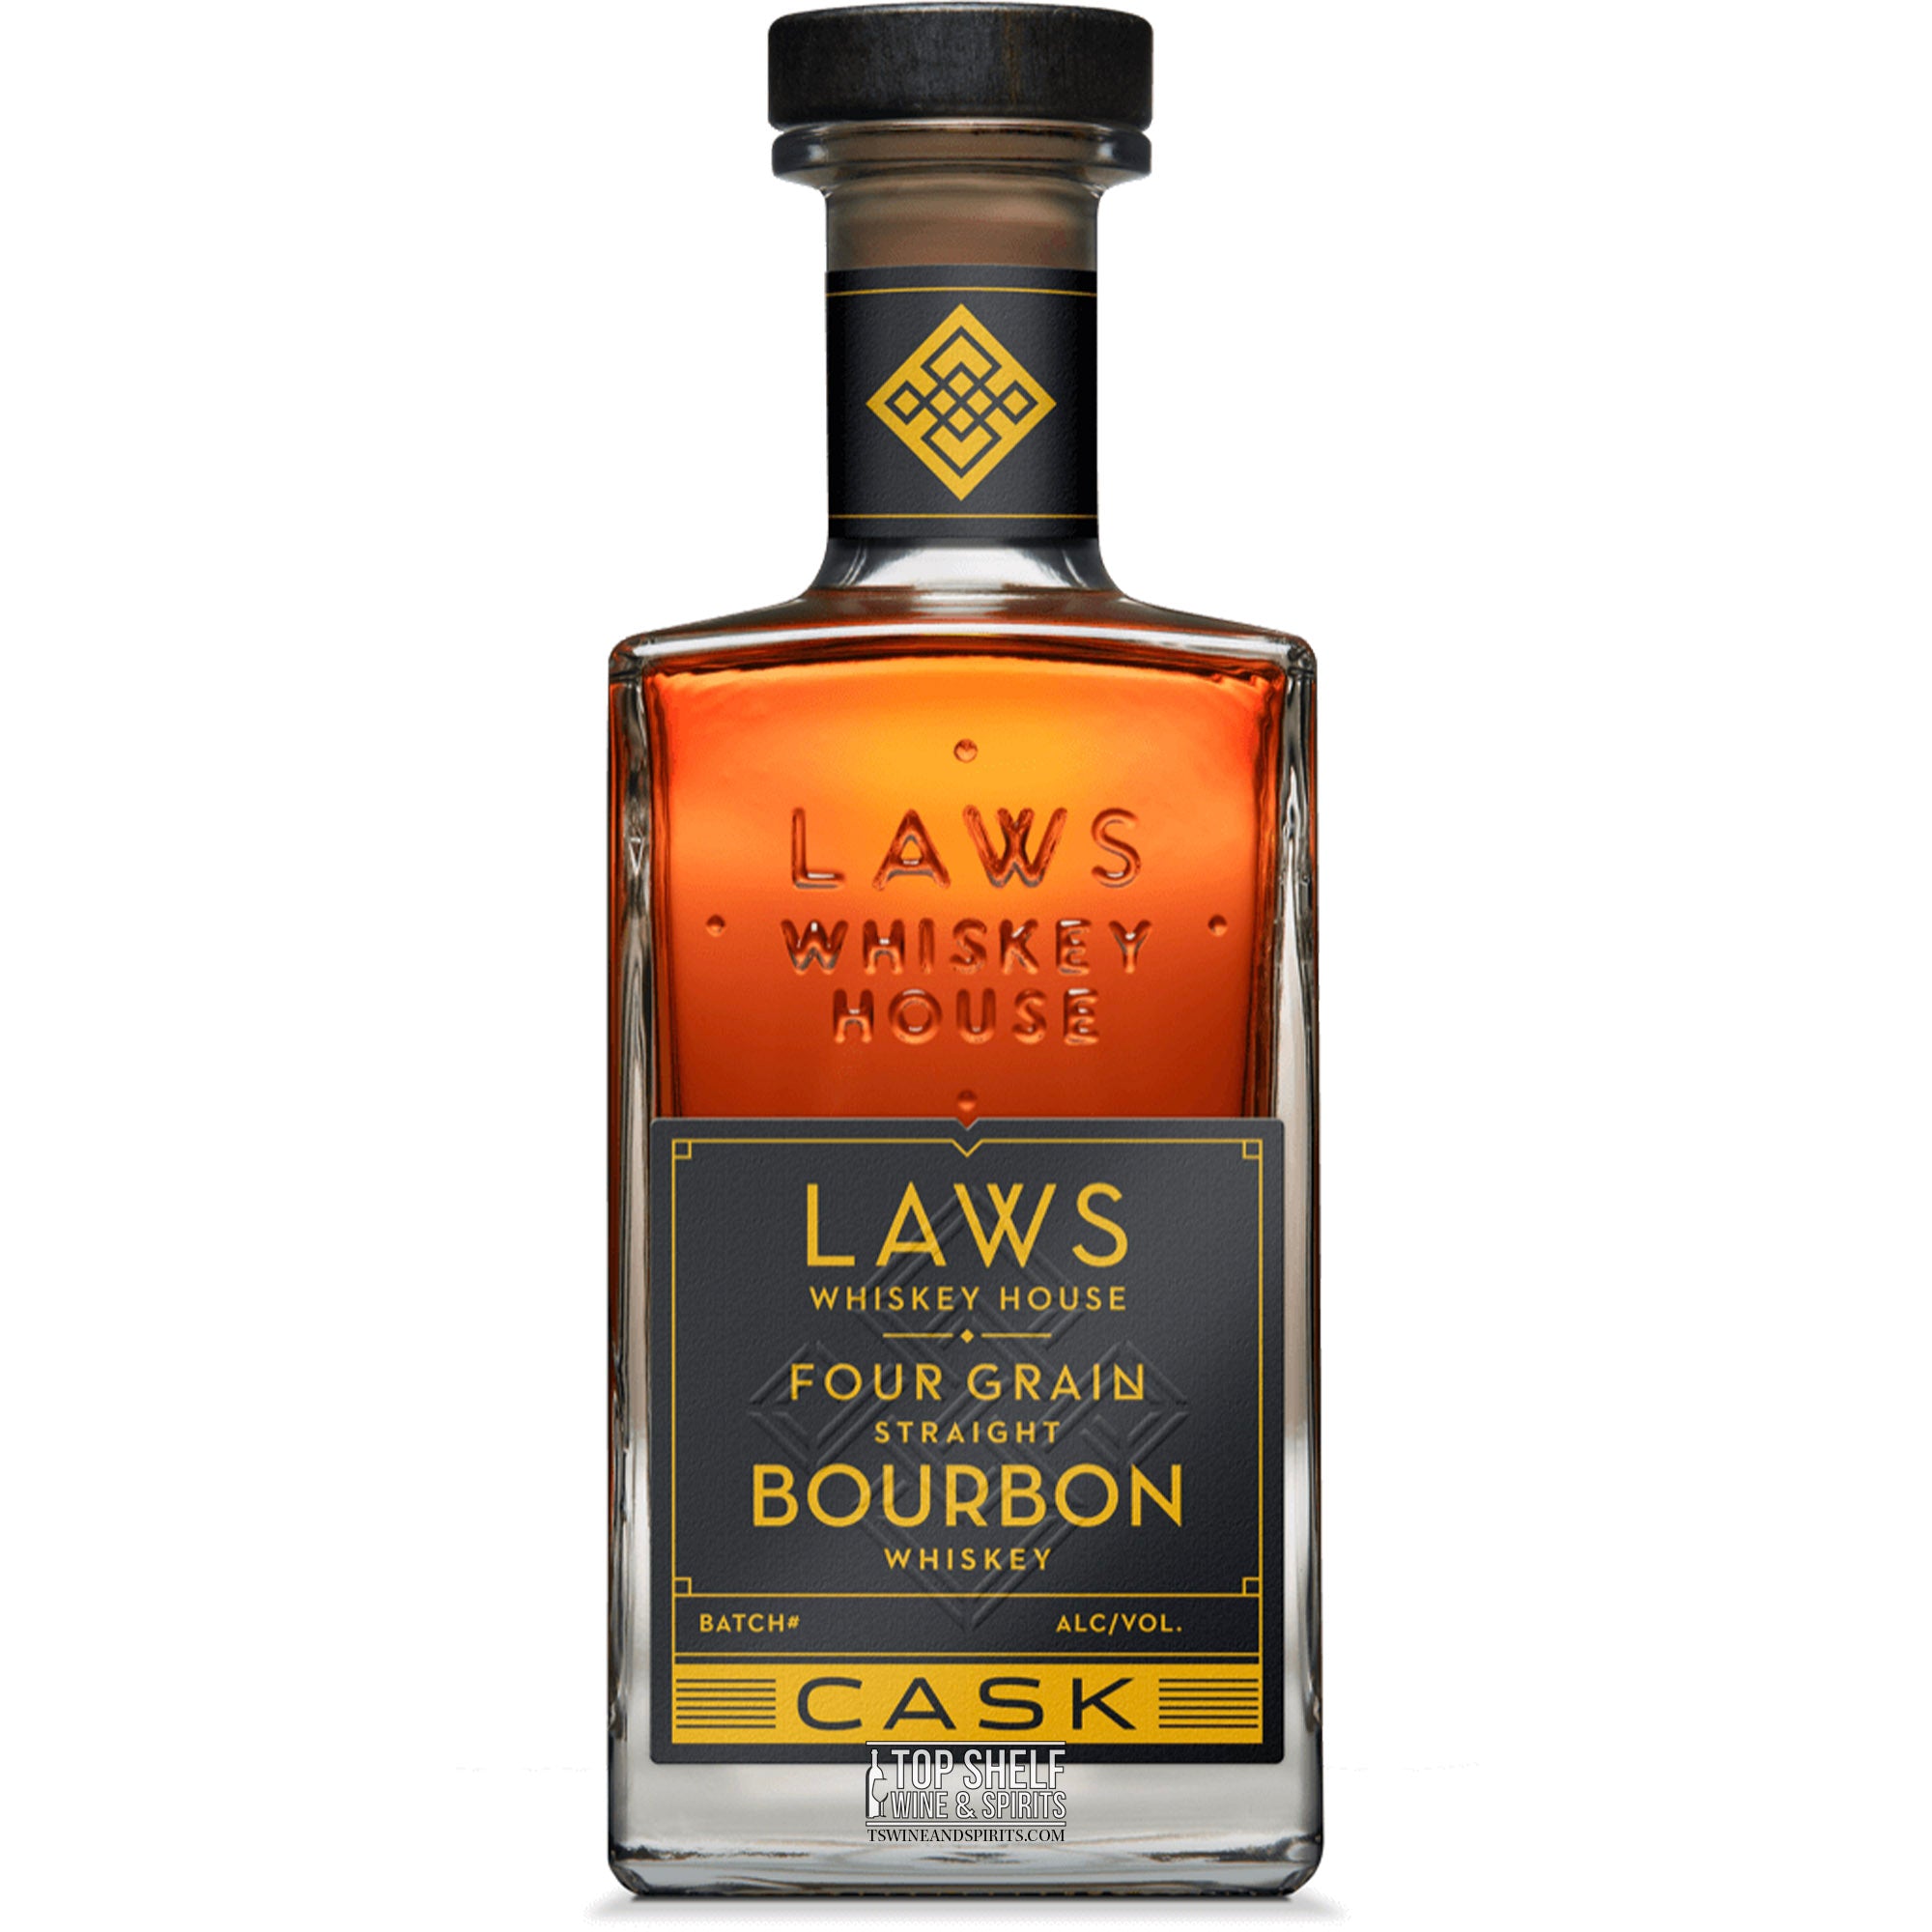 Laws Whiskey House Four Grain Bourbon (Cask Strength)